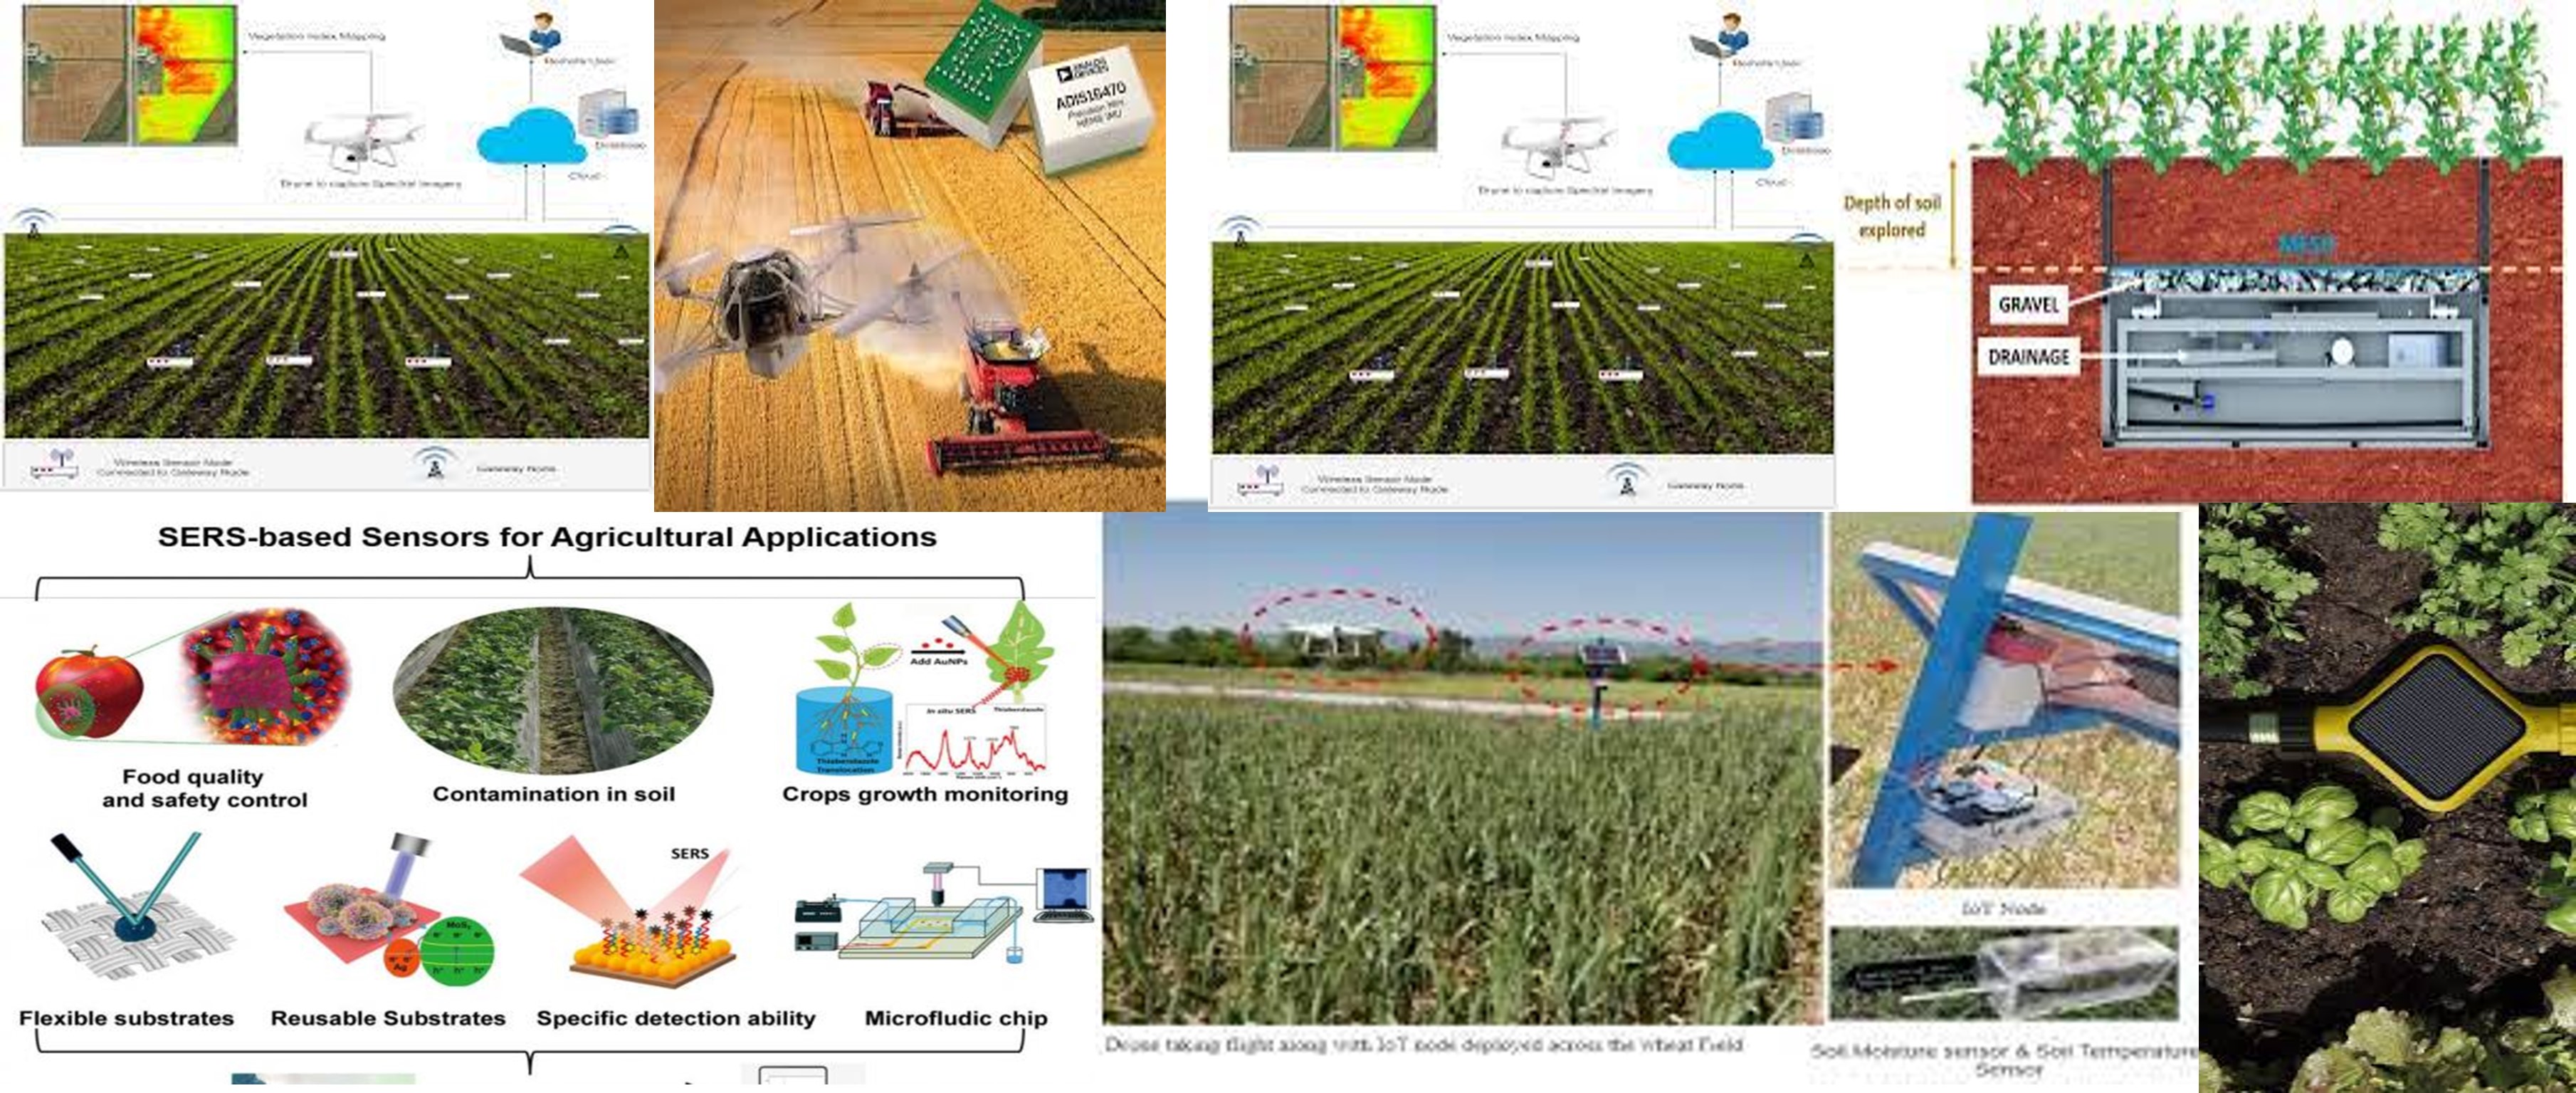 Sensores-sers-agricultura